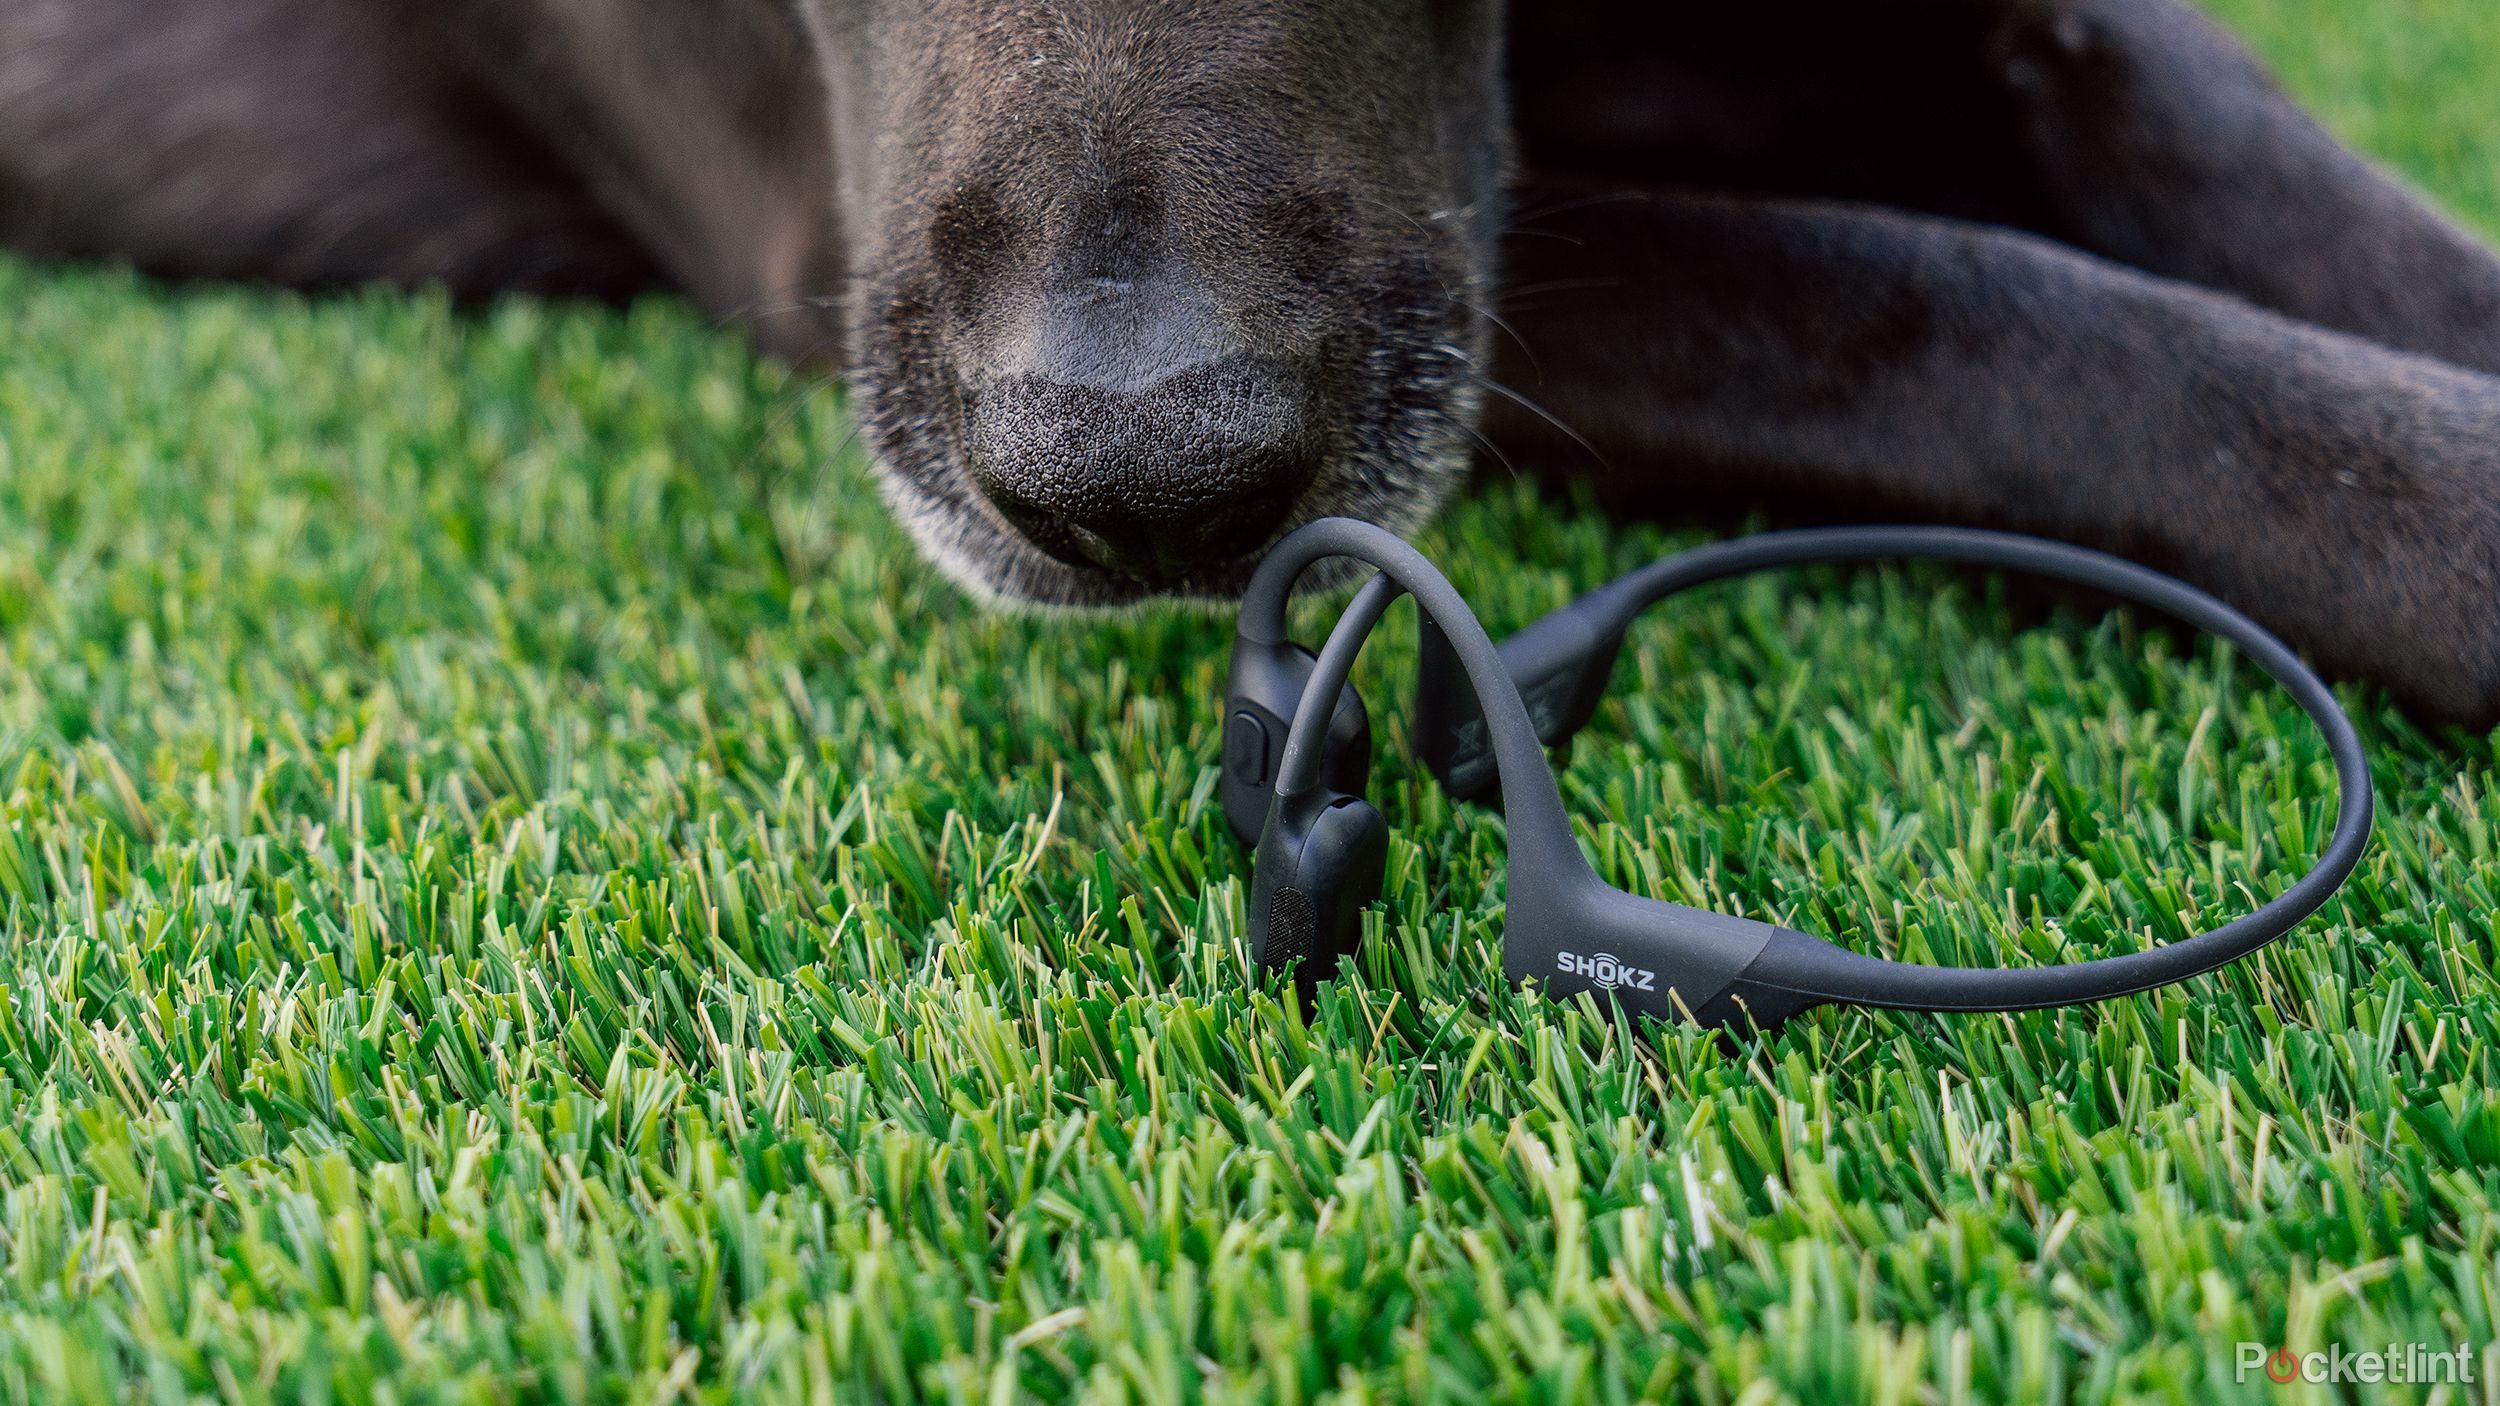 The nose of a black dog sniffs a set of Shokz bone conduction headphones sitting on fake turf. 